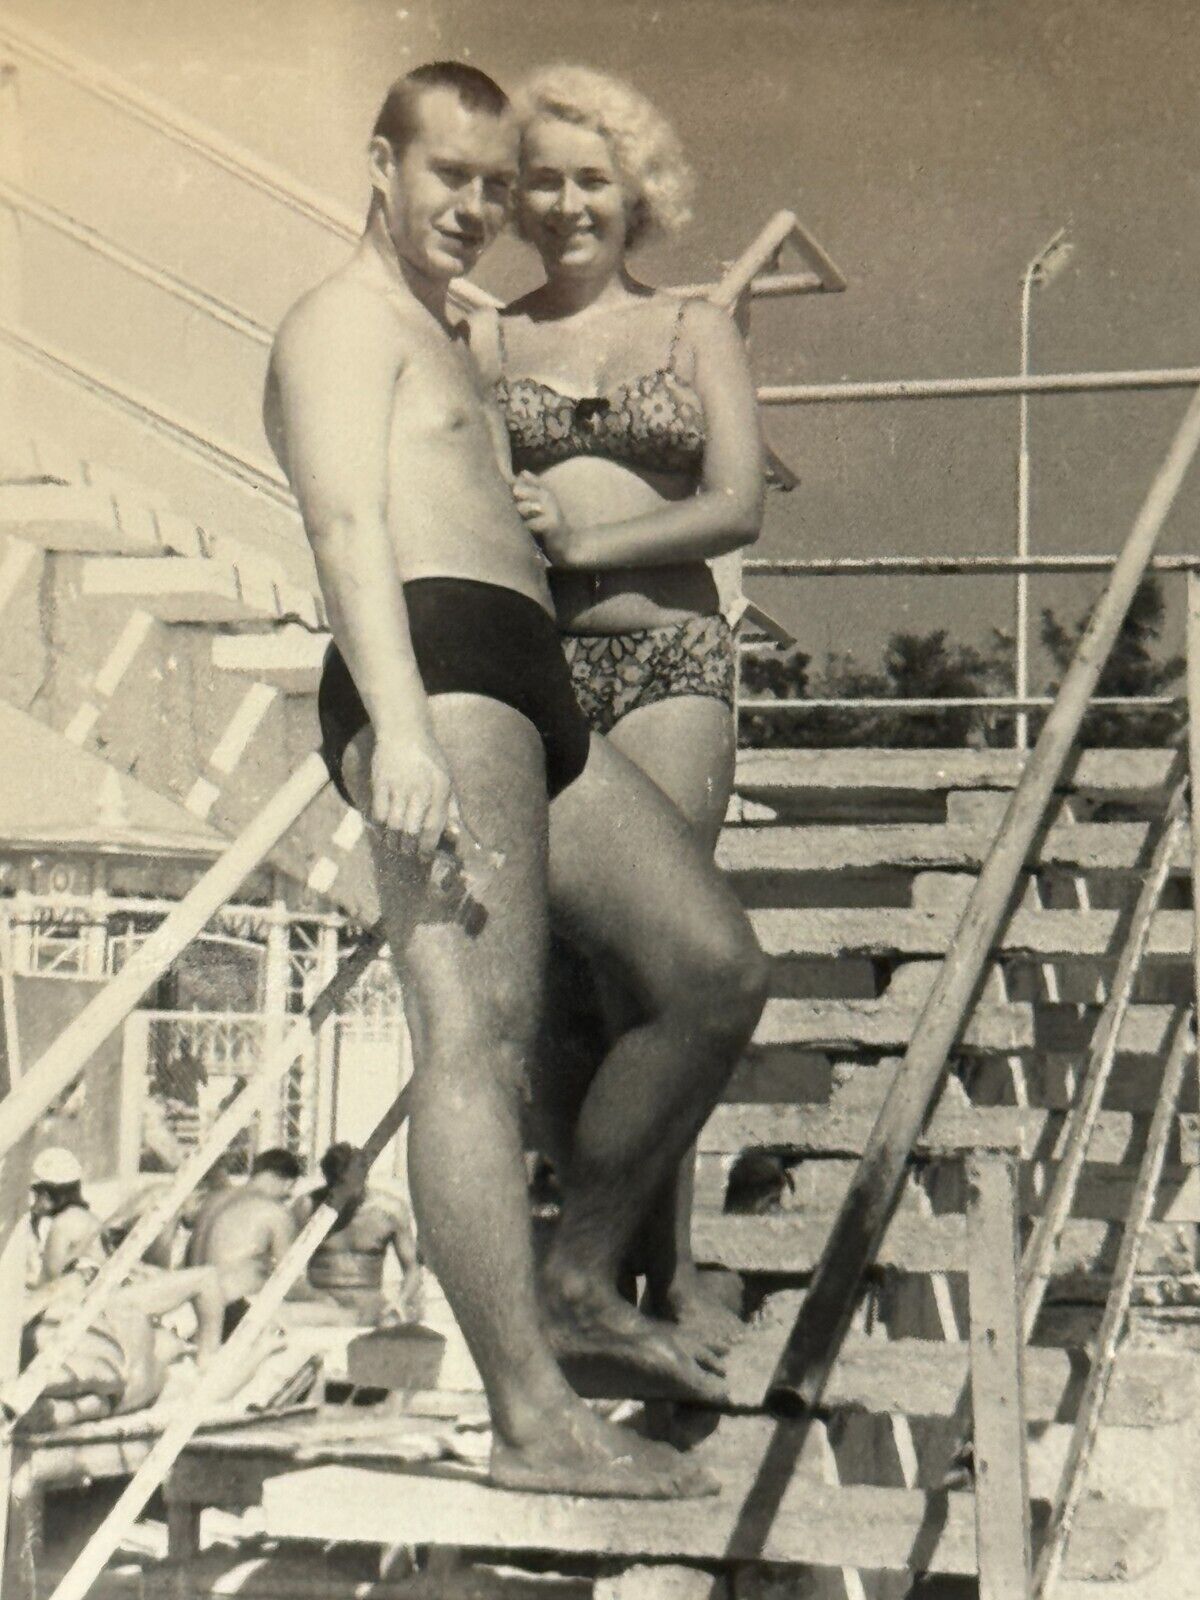 1960 Shirtless Man Affectionate Guy Trunks Bulge Blonde Woman Gay int B&W Photo